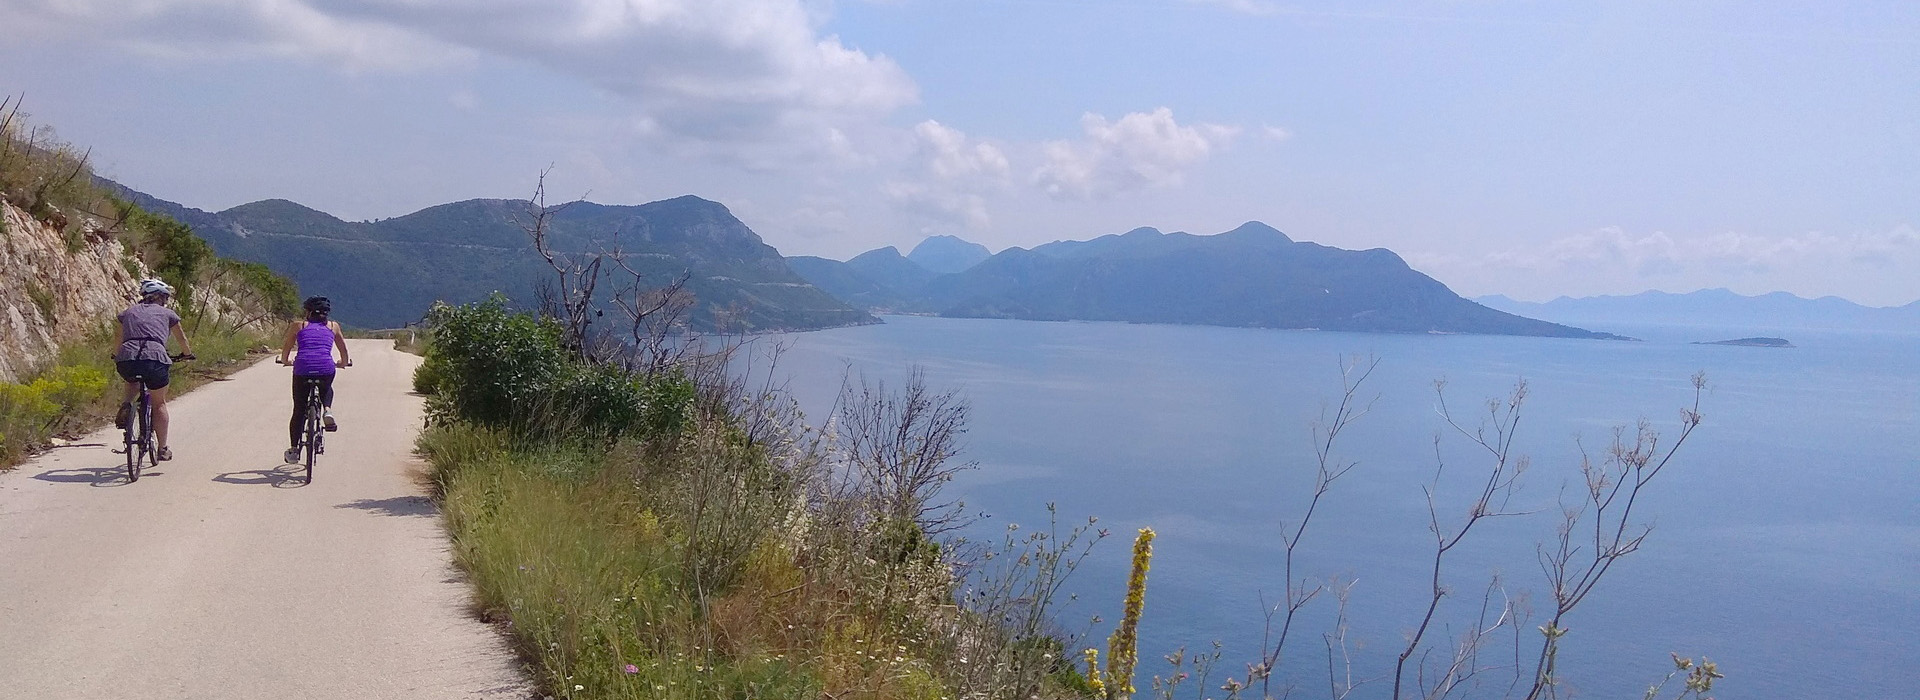 Cycling on the Dalmatian Coast guided holiday - Peljesac